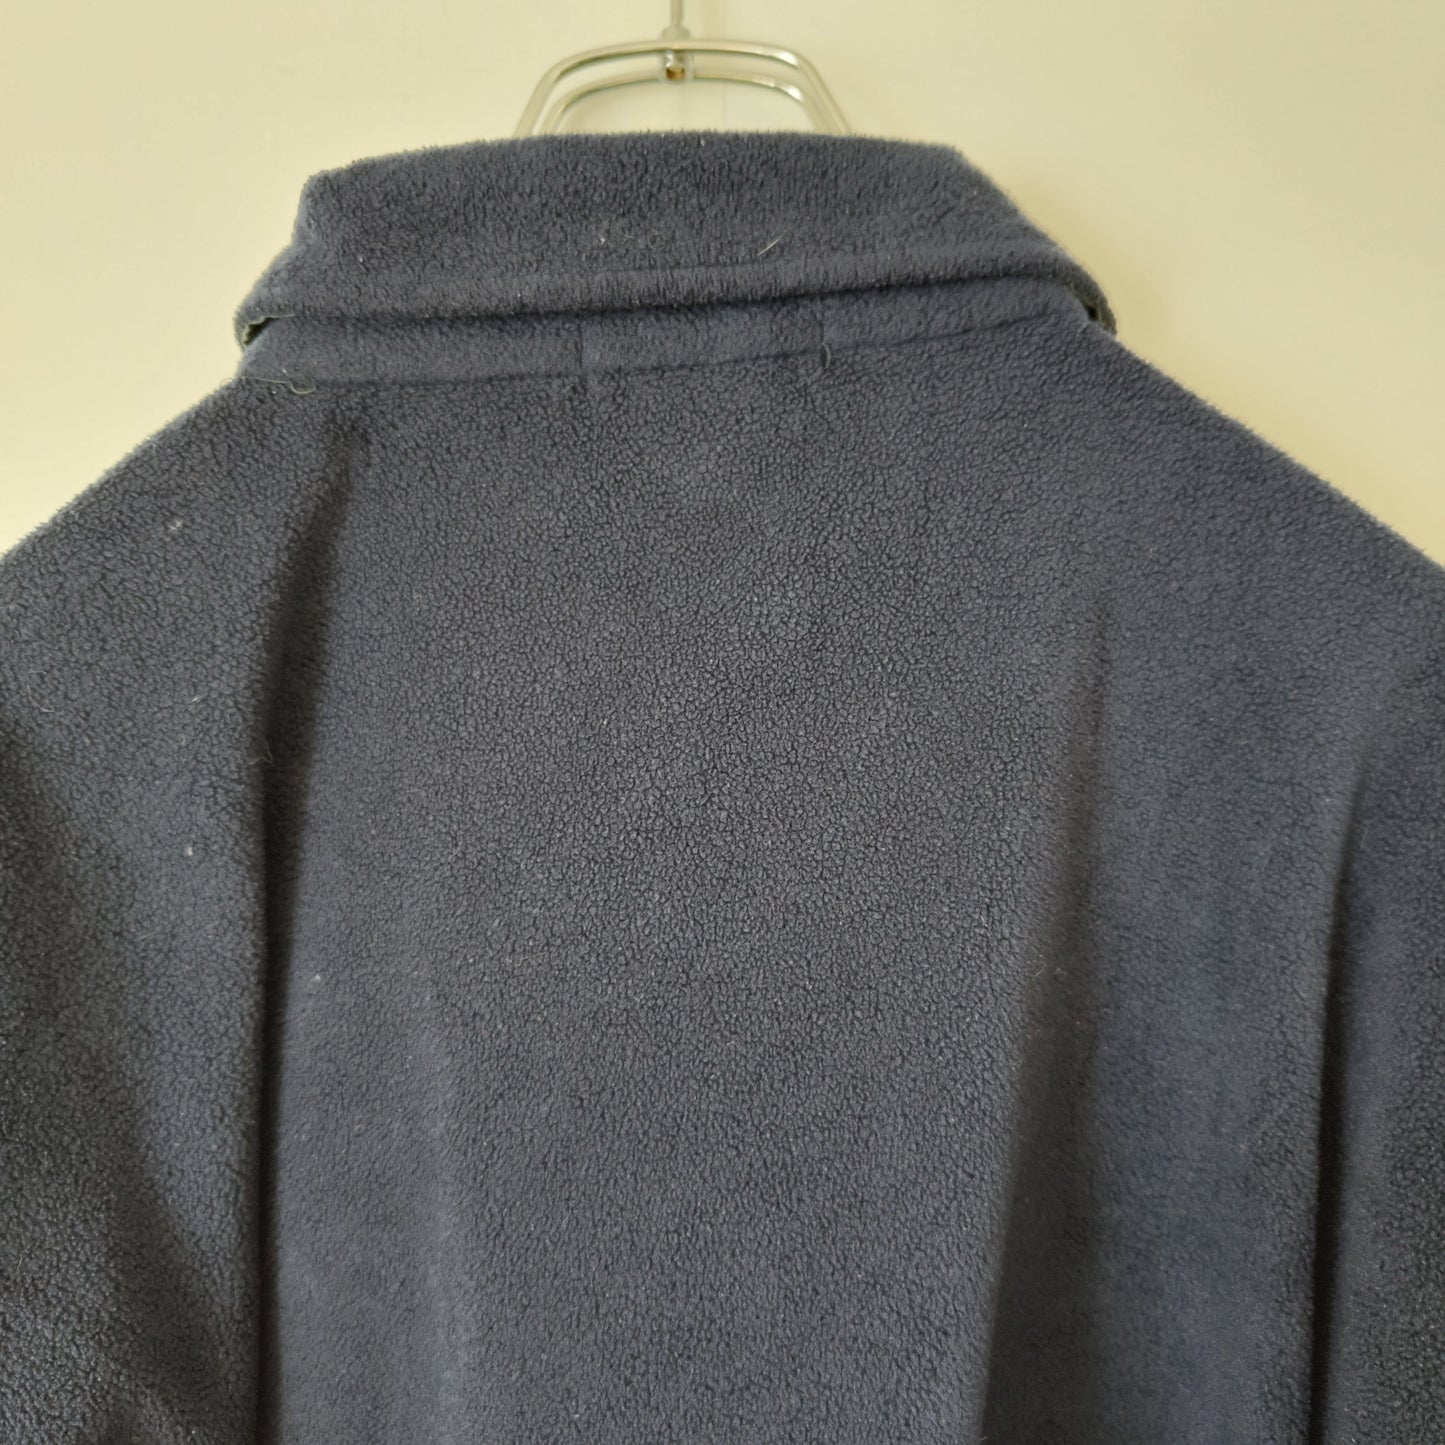 [NAUTICA] 90's swingtop fleece jacket, made in U.S.A